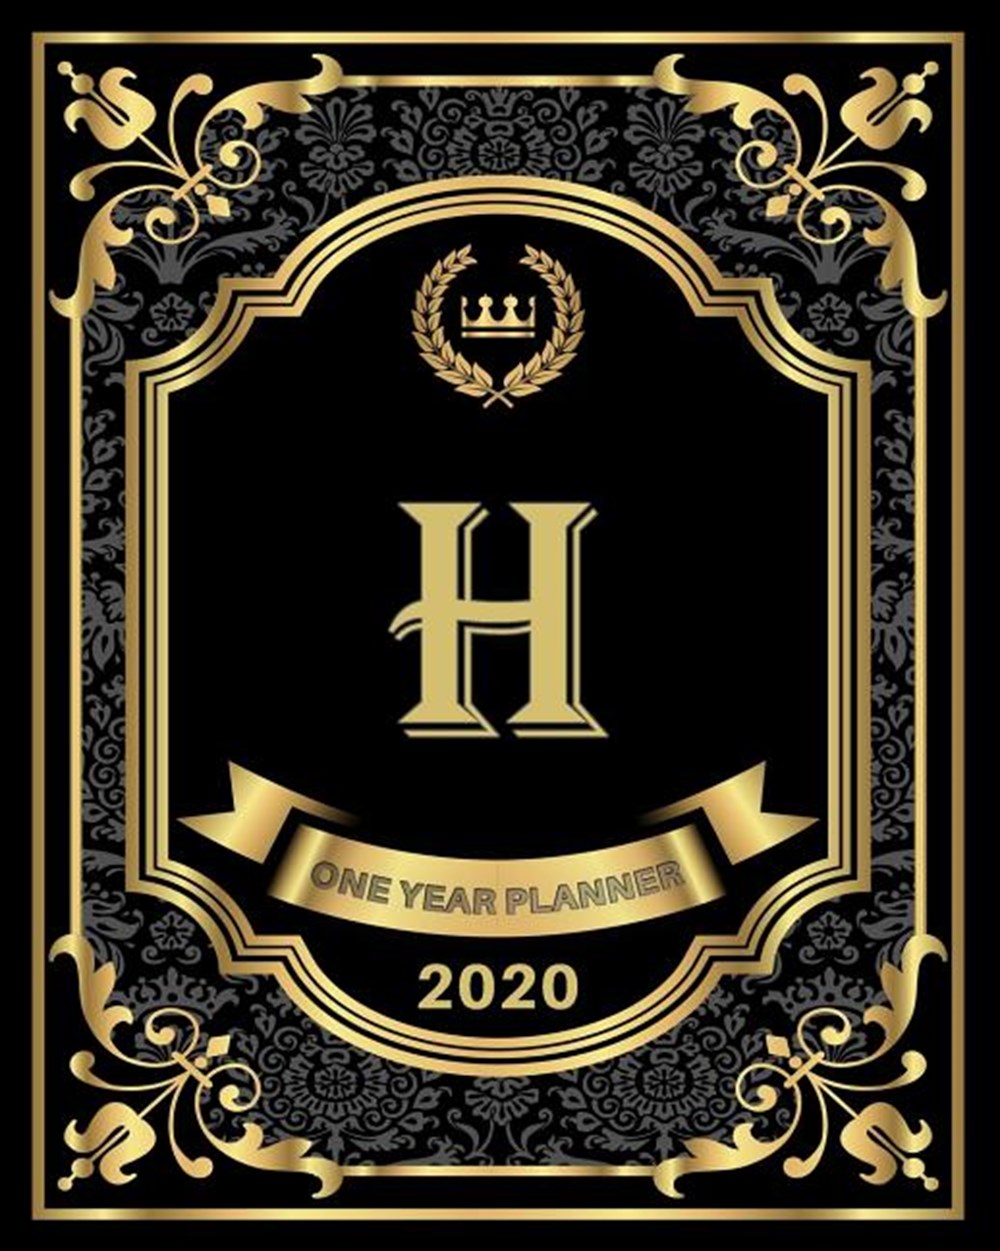 H - 2020 One Year Planner Elegant Black and Gold Monogram Initials - Pretty Calendar Organizer - One